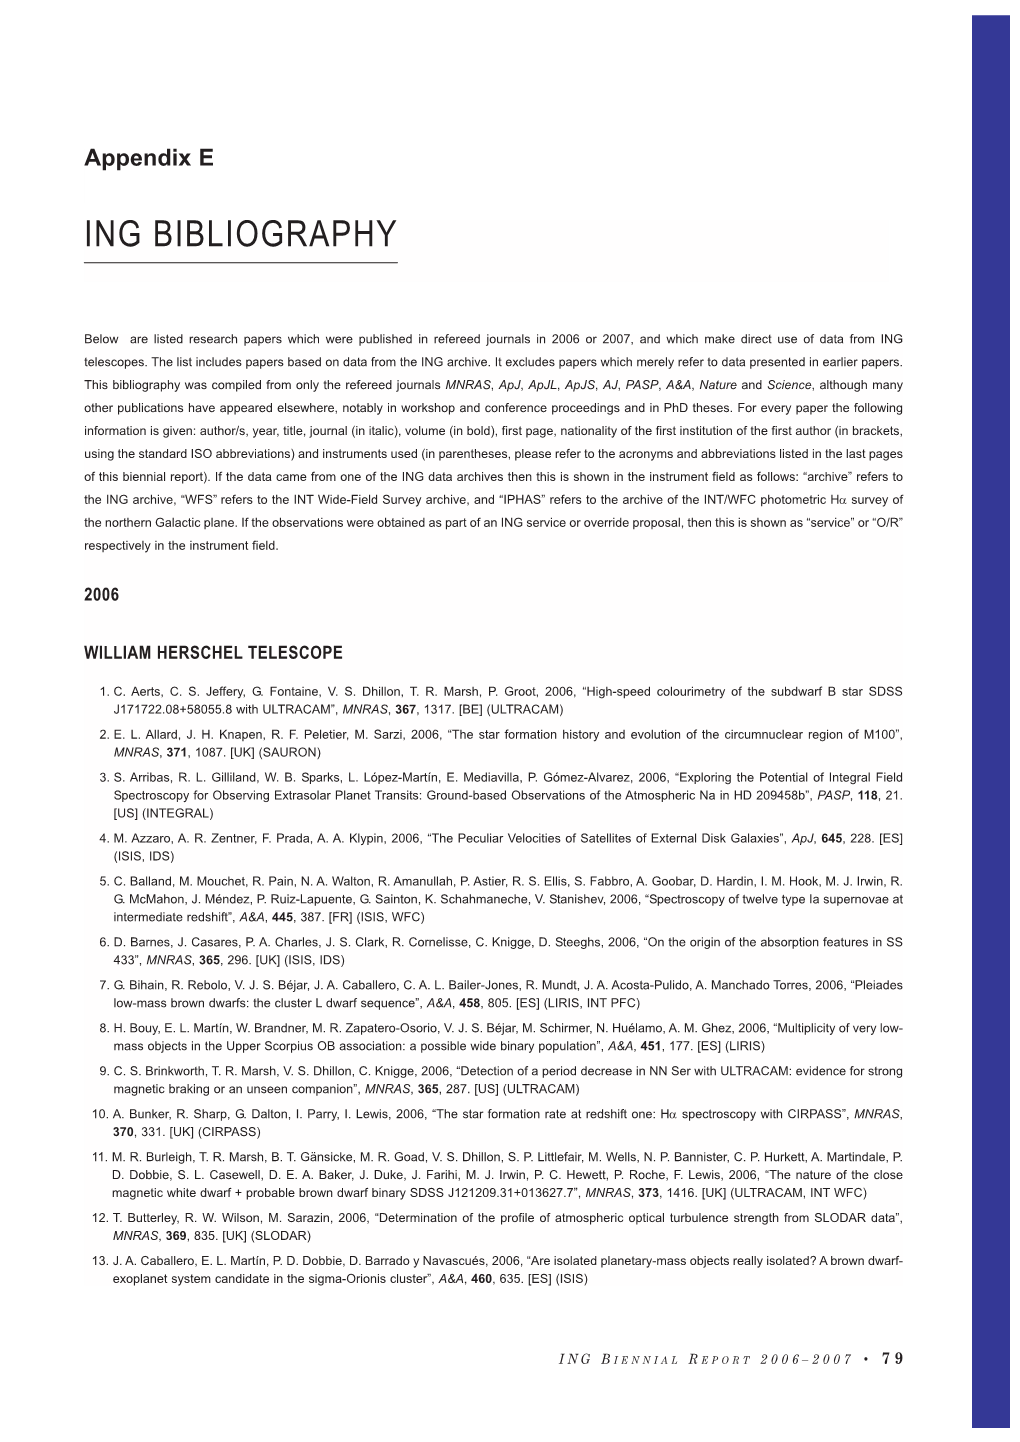 Appendix E. ING Bibliography